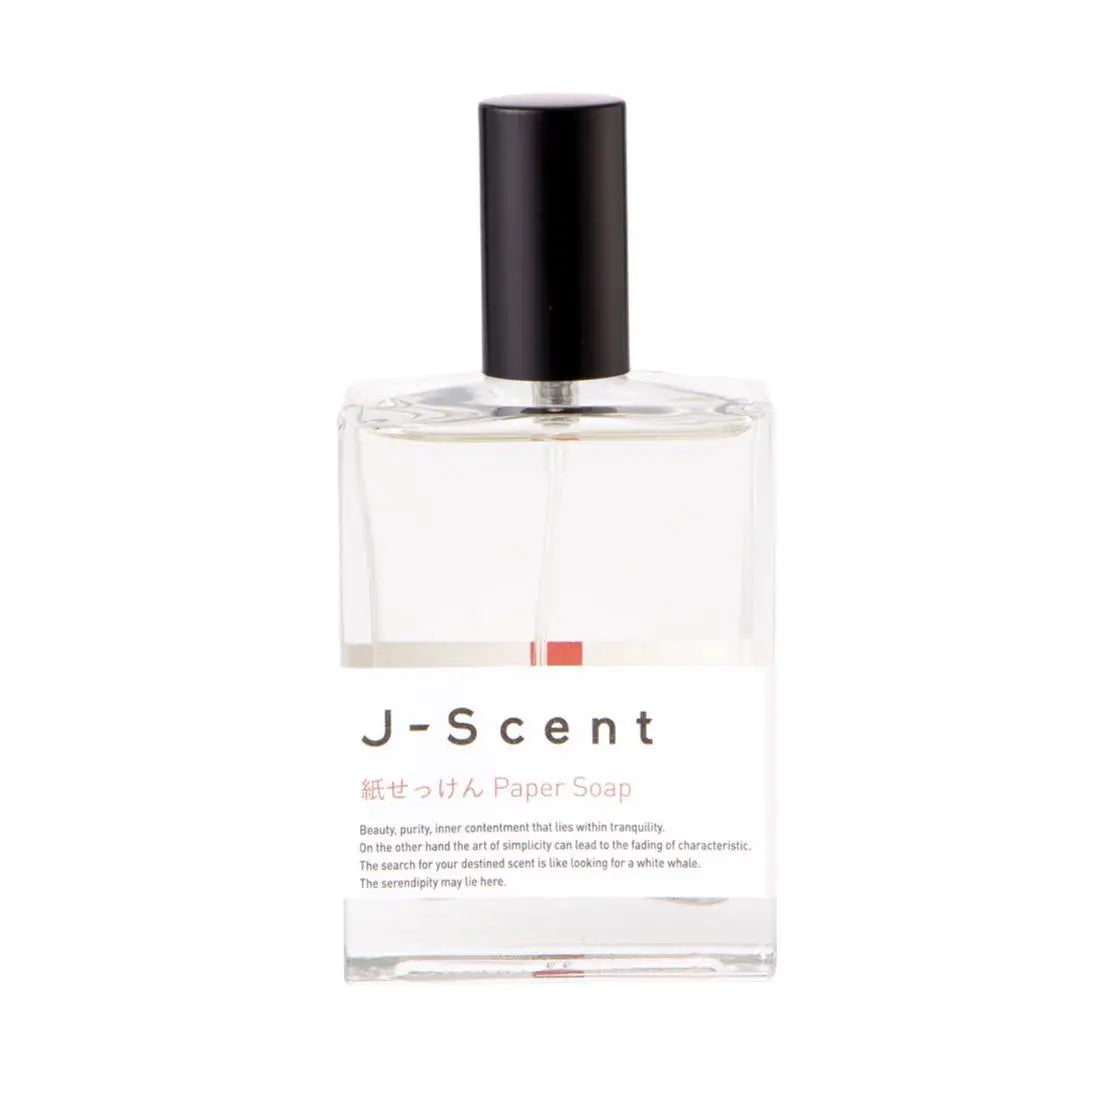 J-scent صابون ورقي - 50 مل